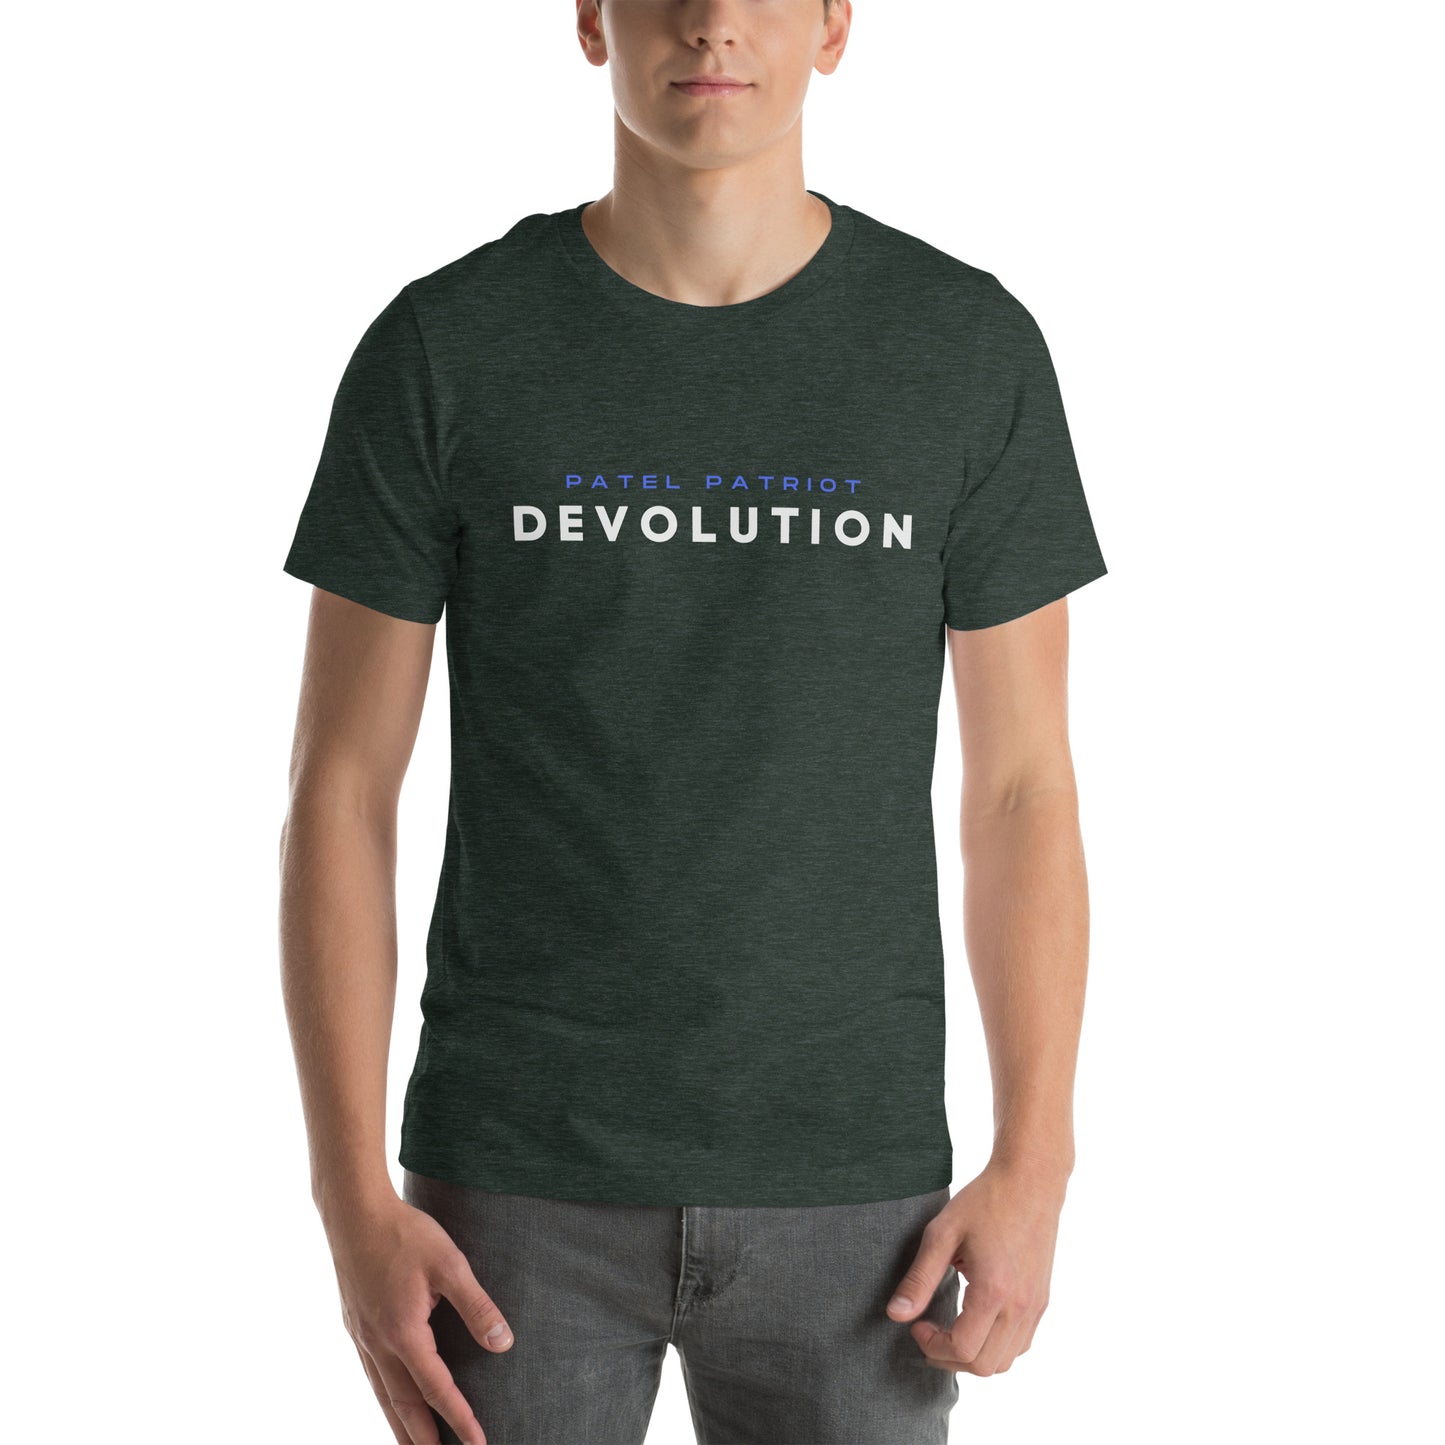 Devolution Unisex t-shirt (white and blue logo)